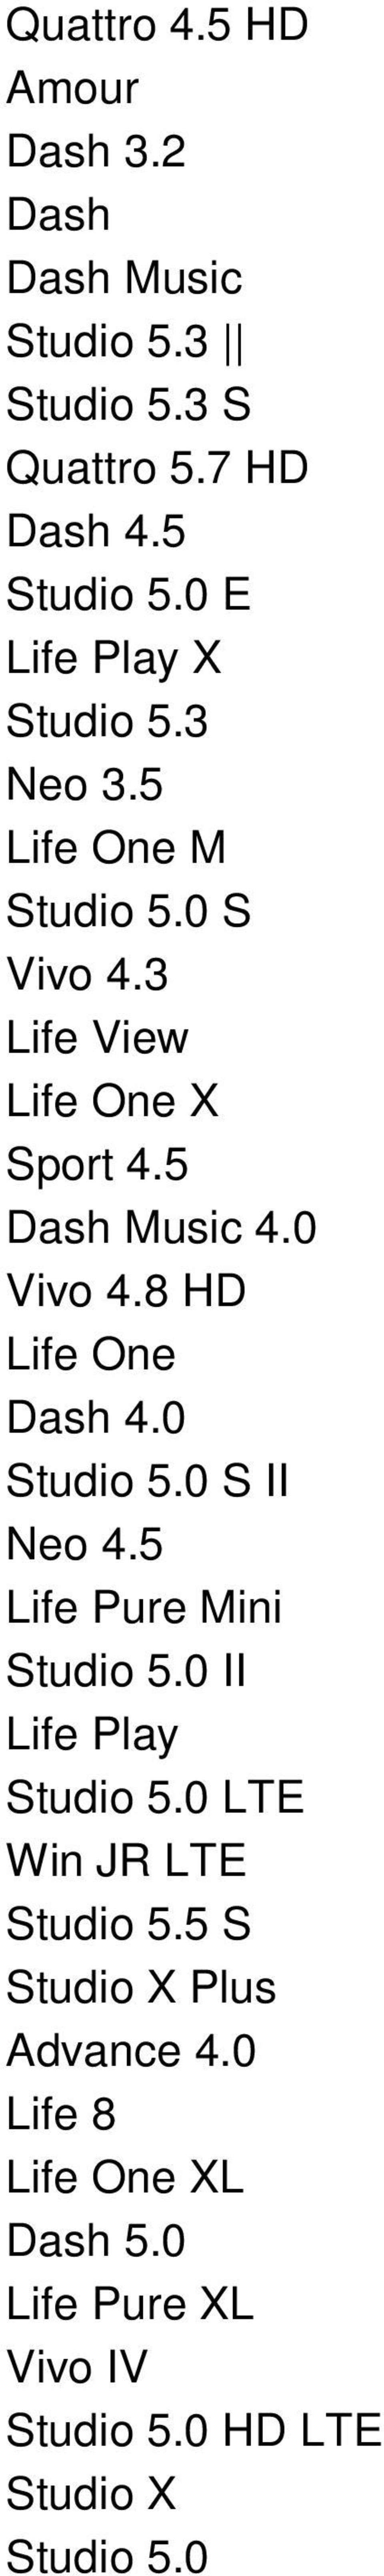 0 Vivo 4.8 HD Life One Dash 4.0 Studio 5.0 S II Neo 4.5 Life Pure Mini Studio 5.0 II Life Play Studio 5.